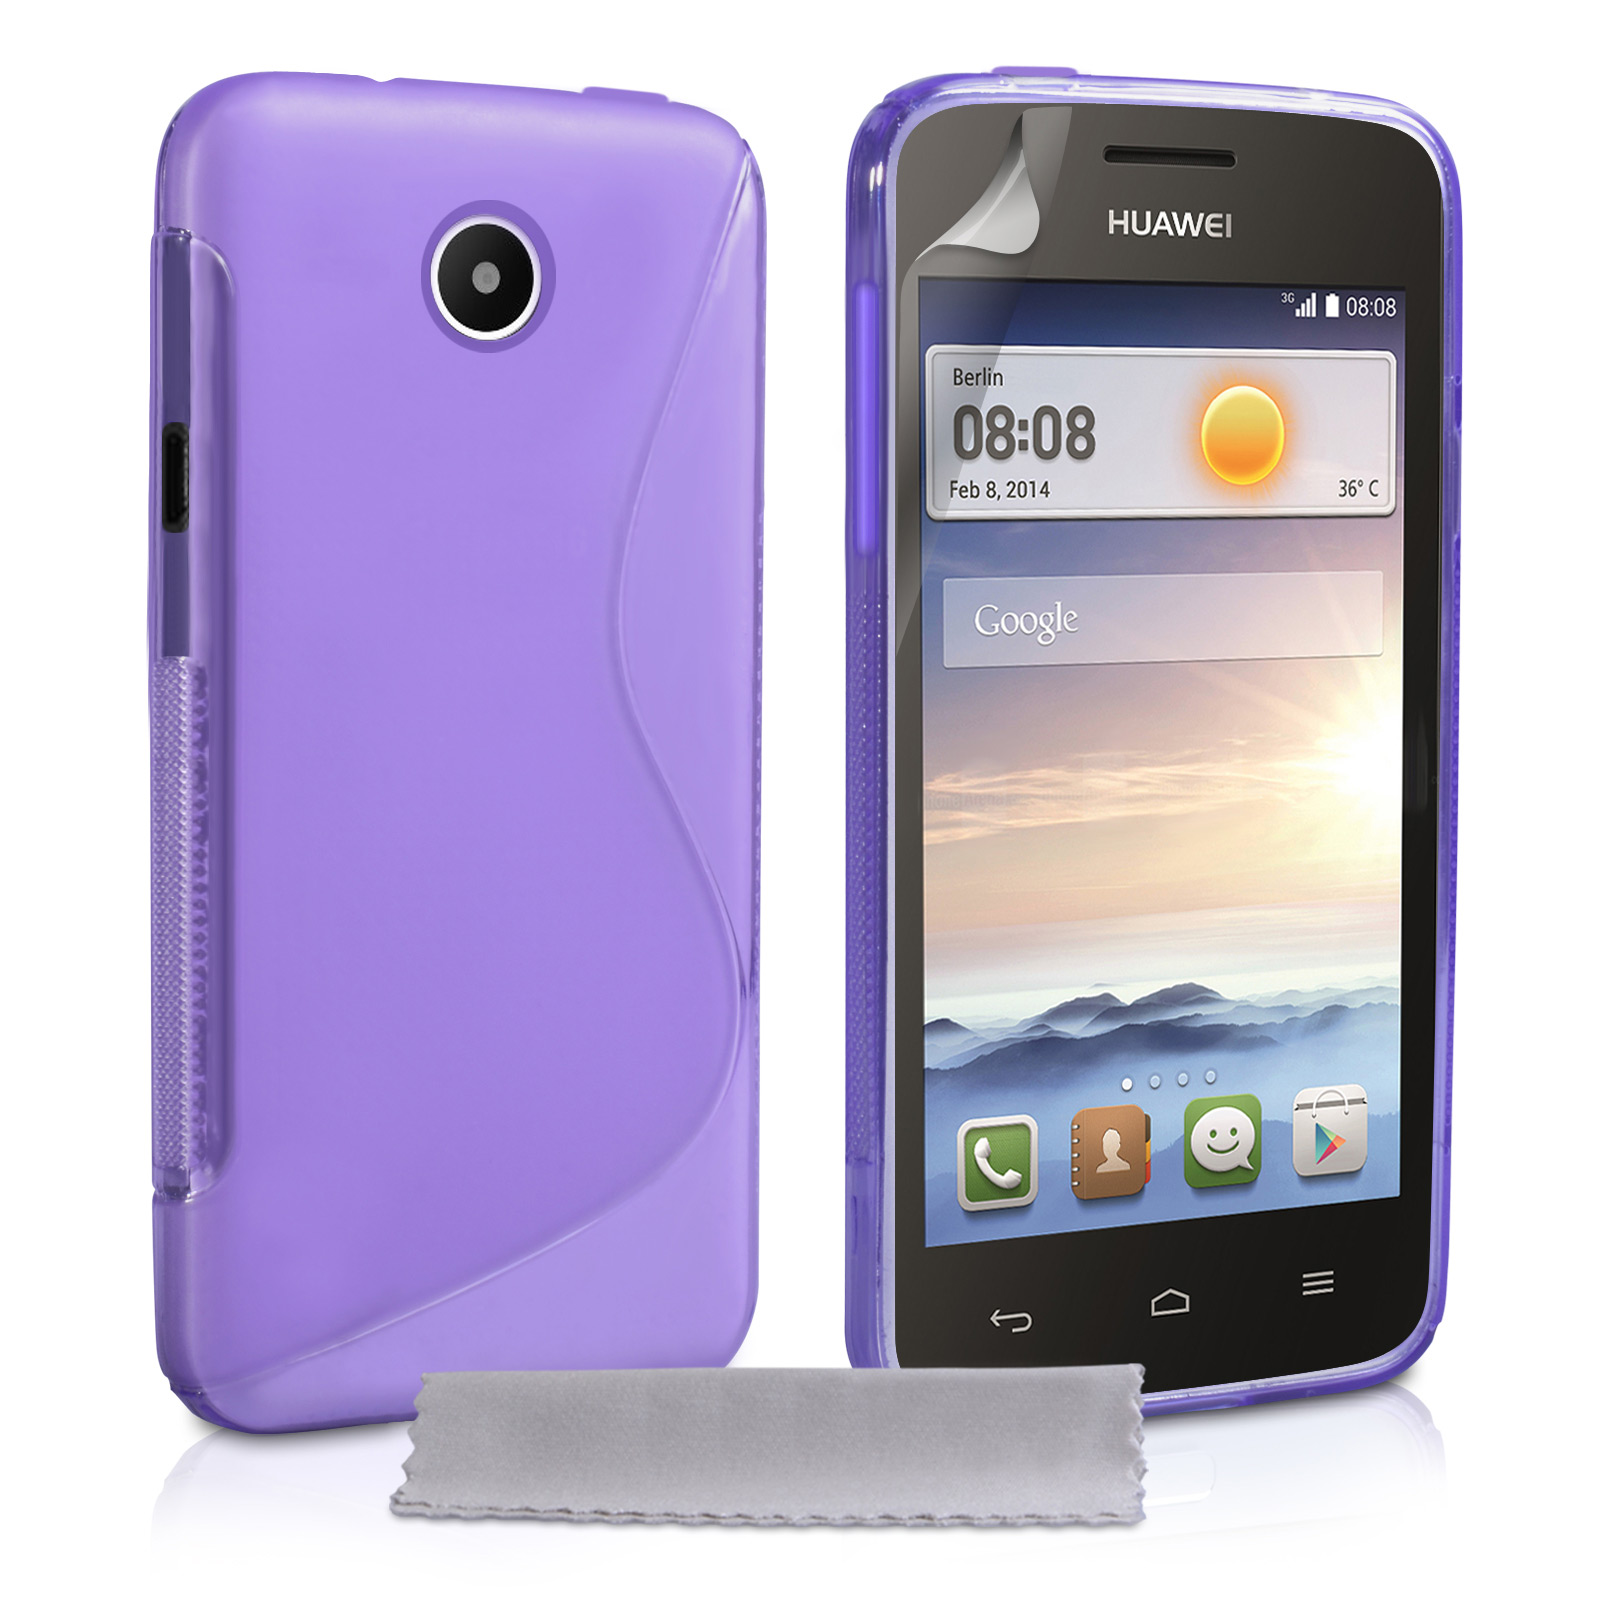 Caseflex Huawei Ascend Y330 Silicone Gel S-Line Case - Purple